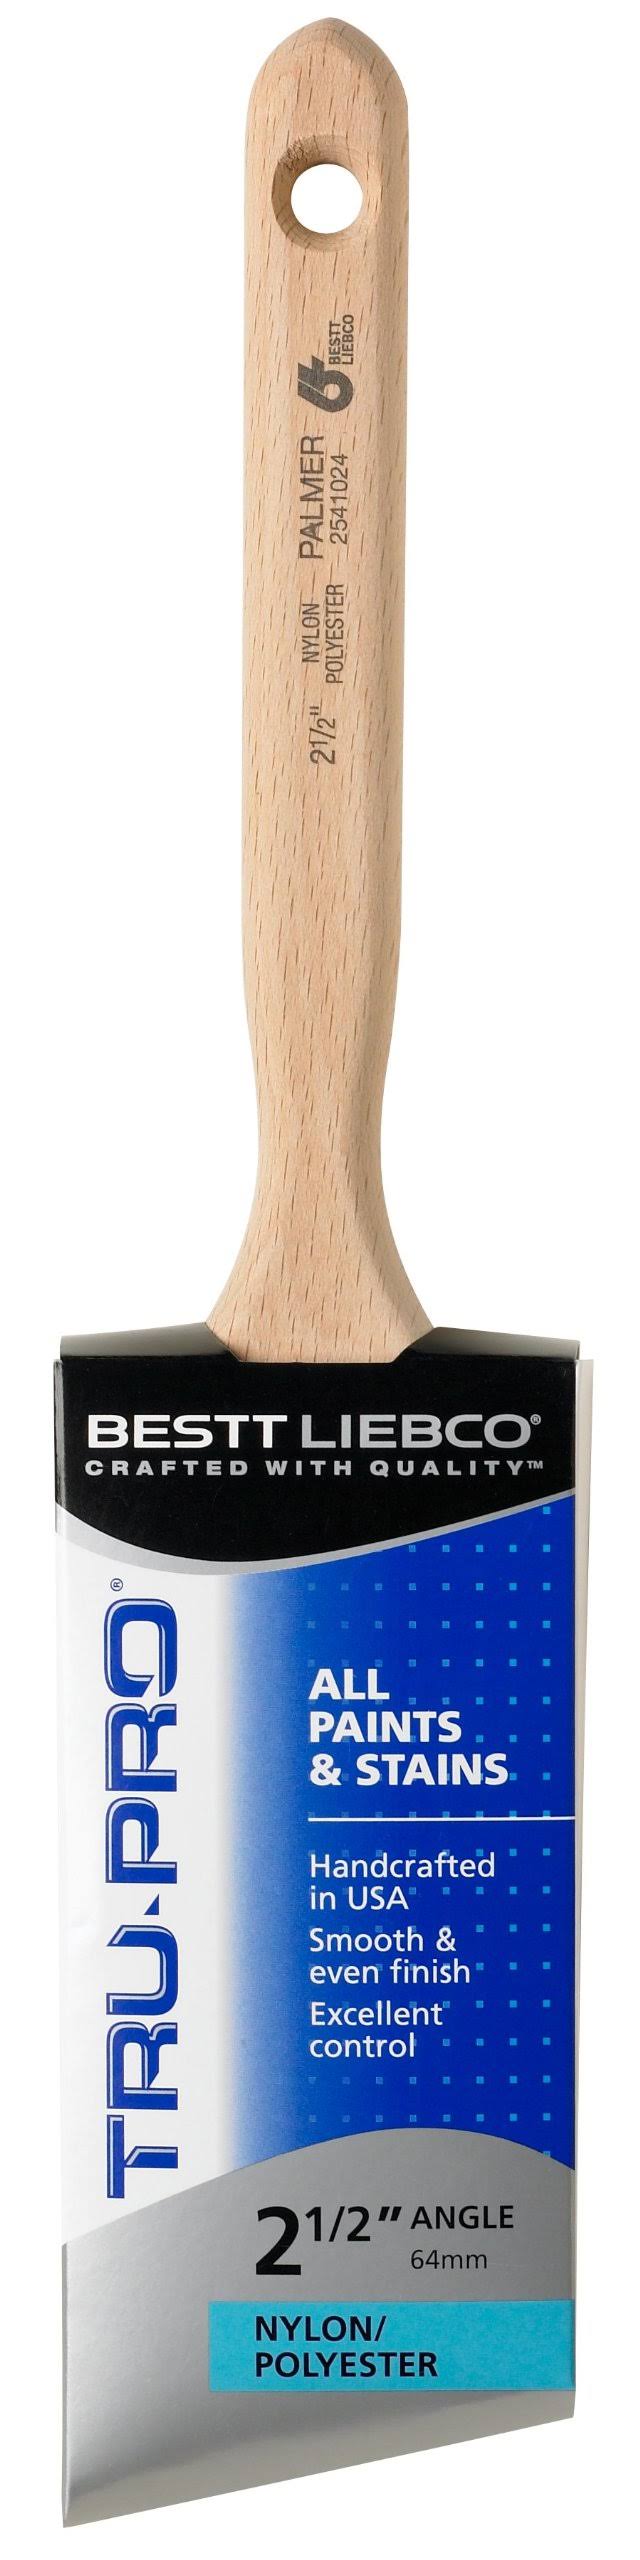 Bestt Liebco Palmer Angle Sash Brush - 2.5"